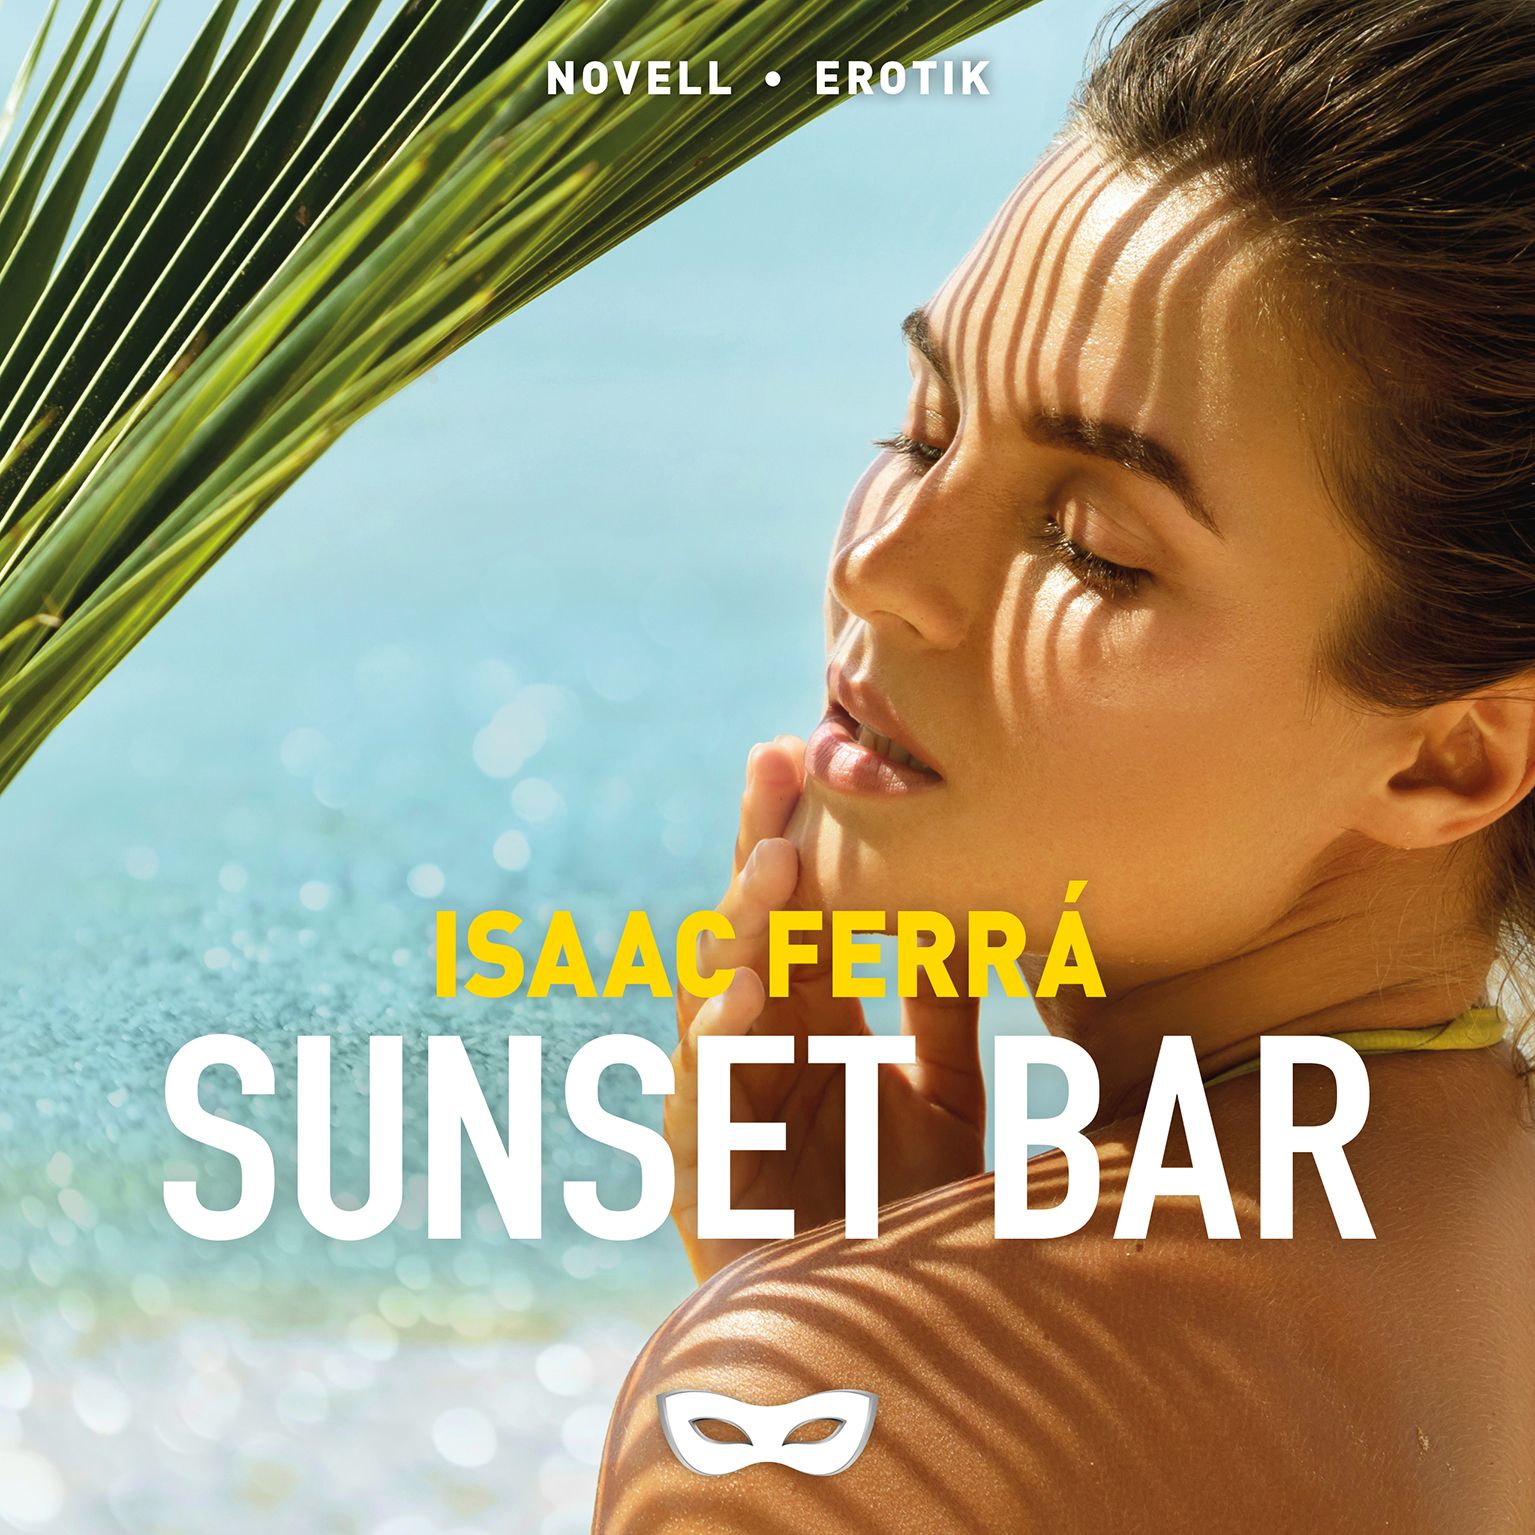 Sunset bar, ljudbok av Isaac Ferrá